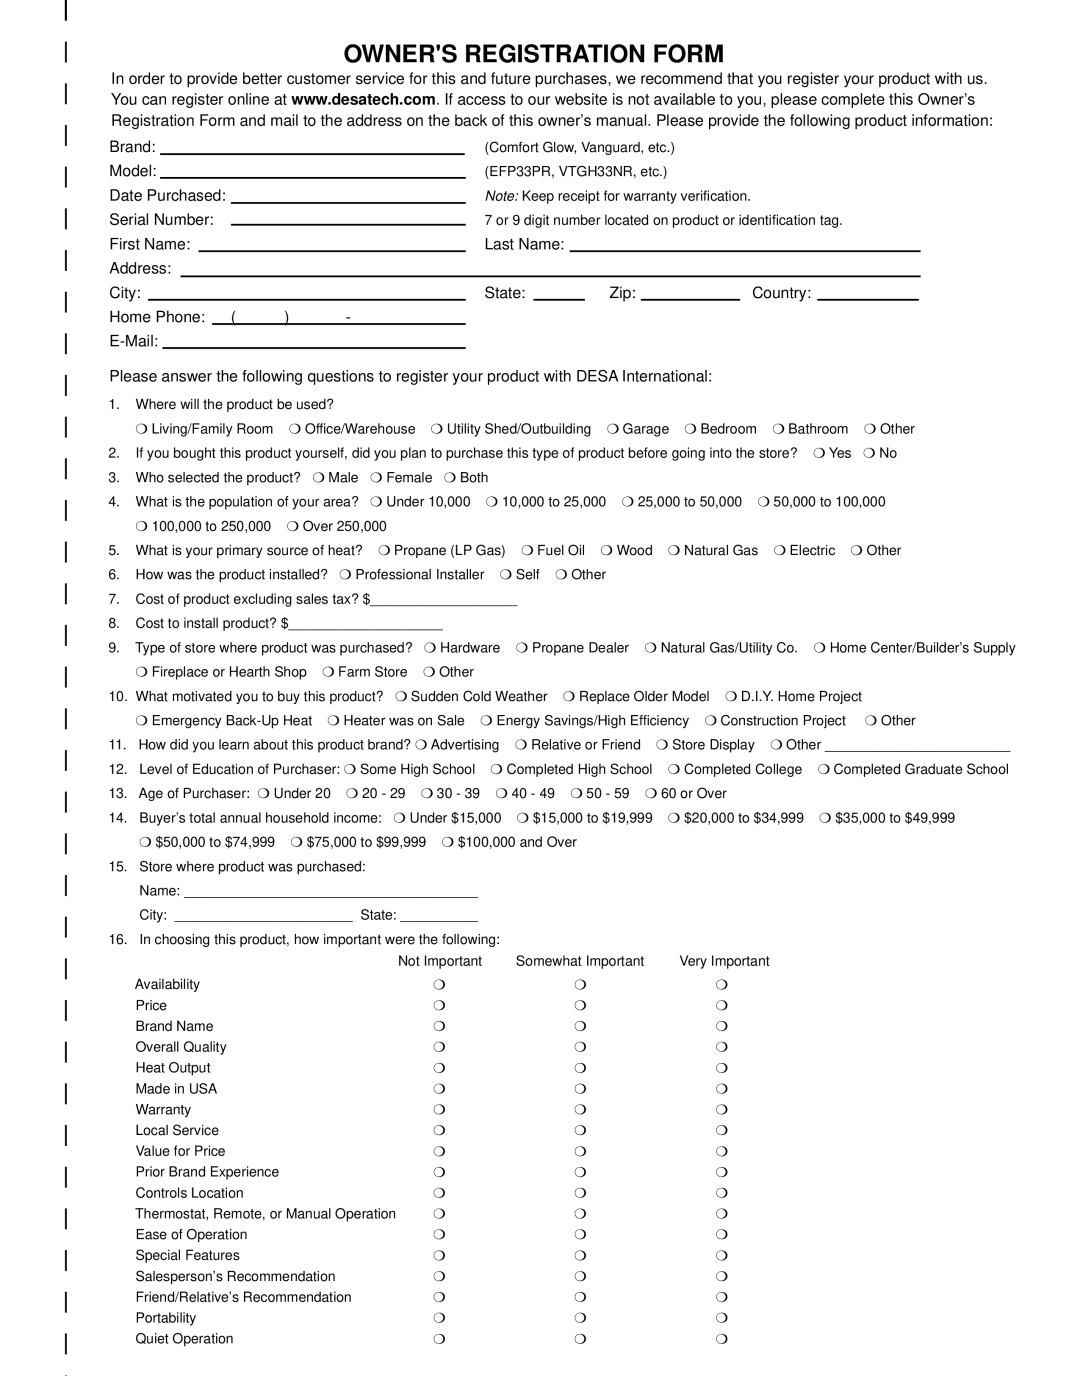 Desa VYM27NRPR installation manual Owners Registration Form 